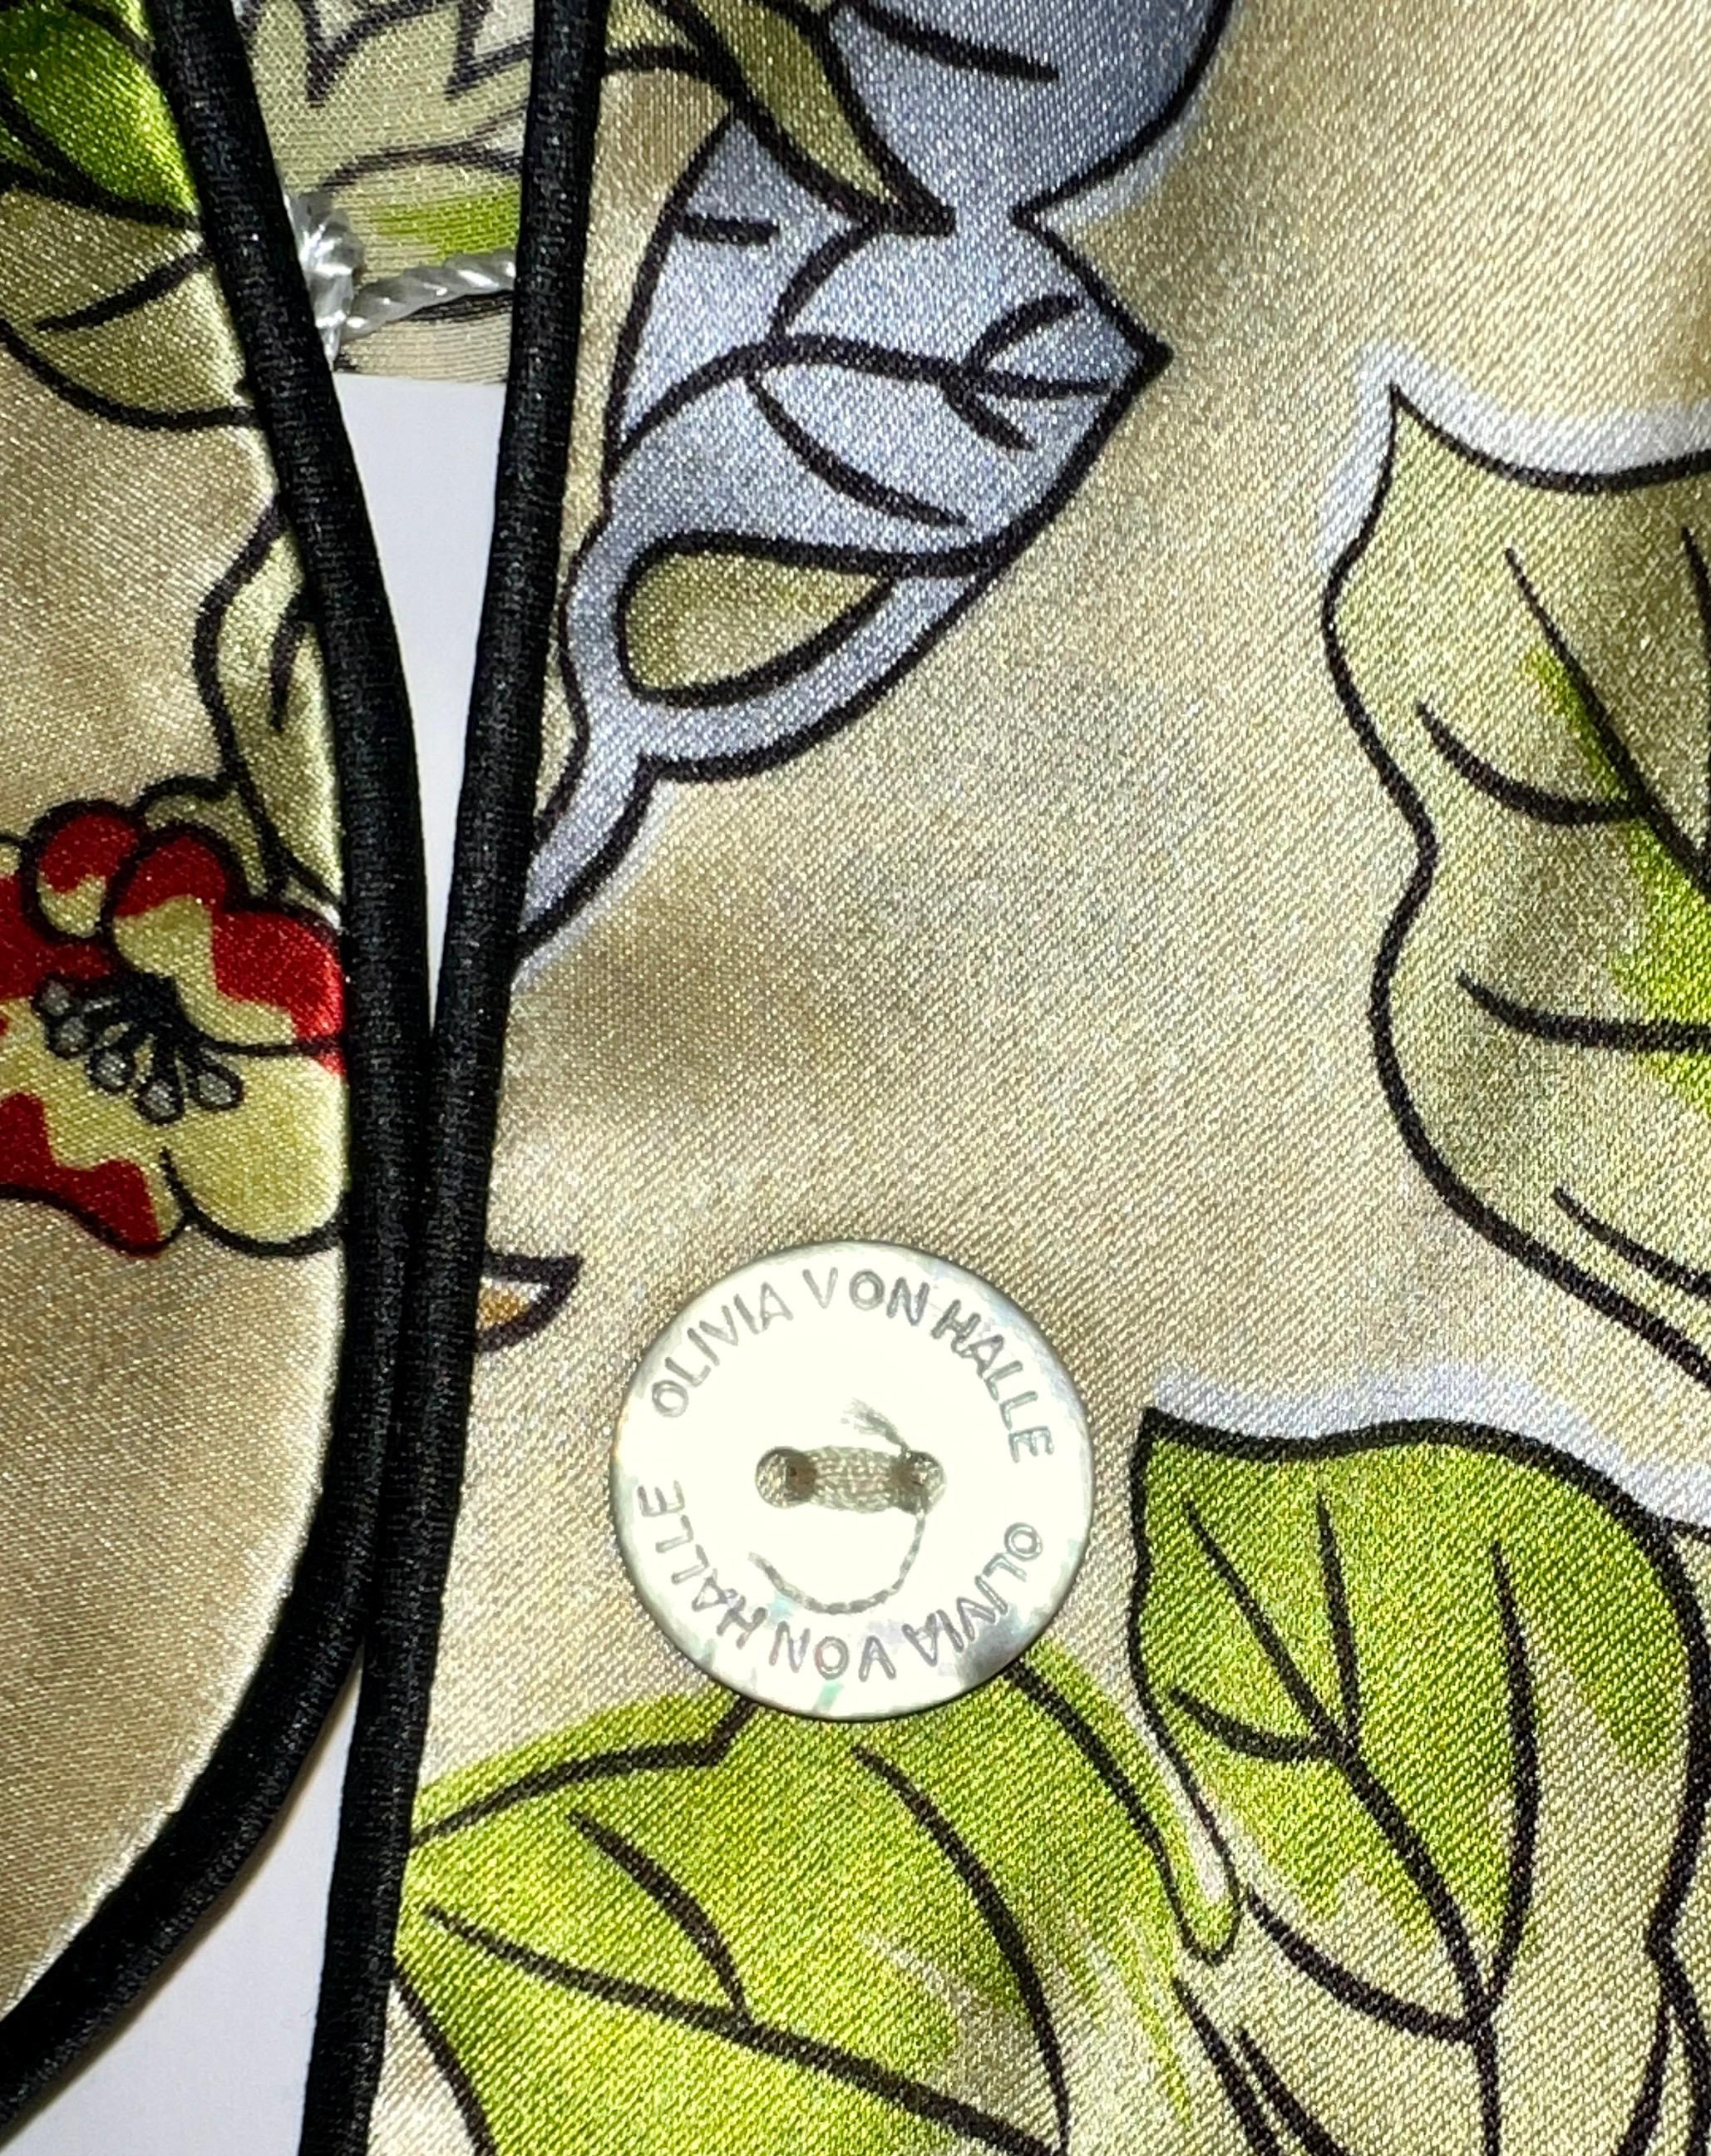 NEW Olivia Von Halle Silk Floral Print Pajamas Lounge Home Sleep Wear Suit M For Sale 4